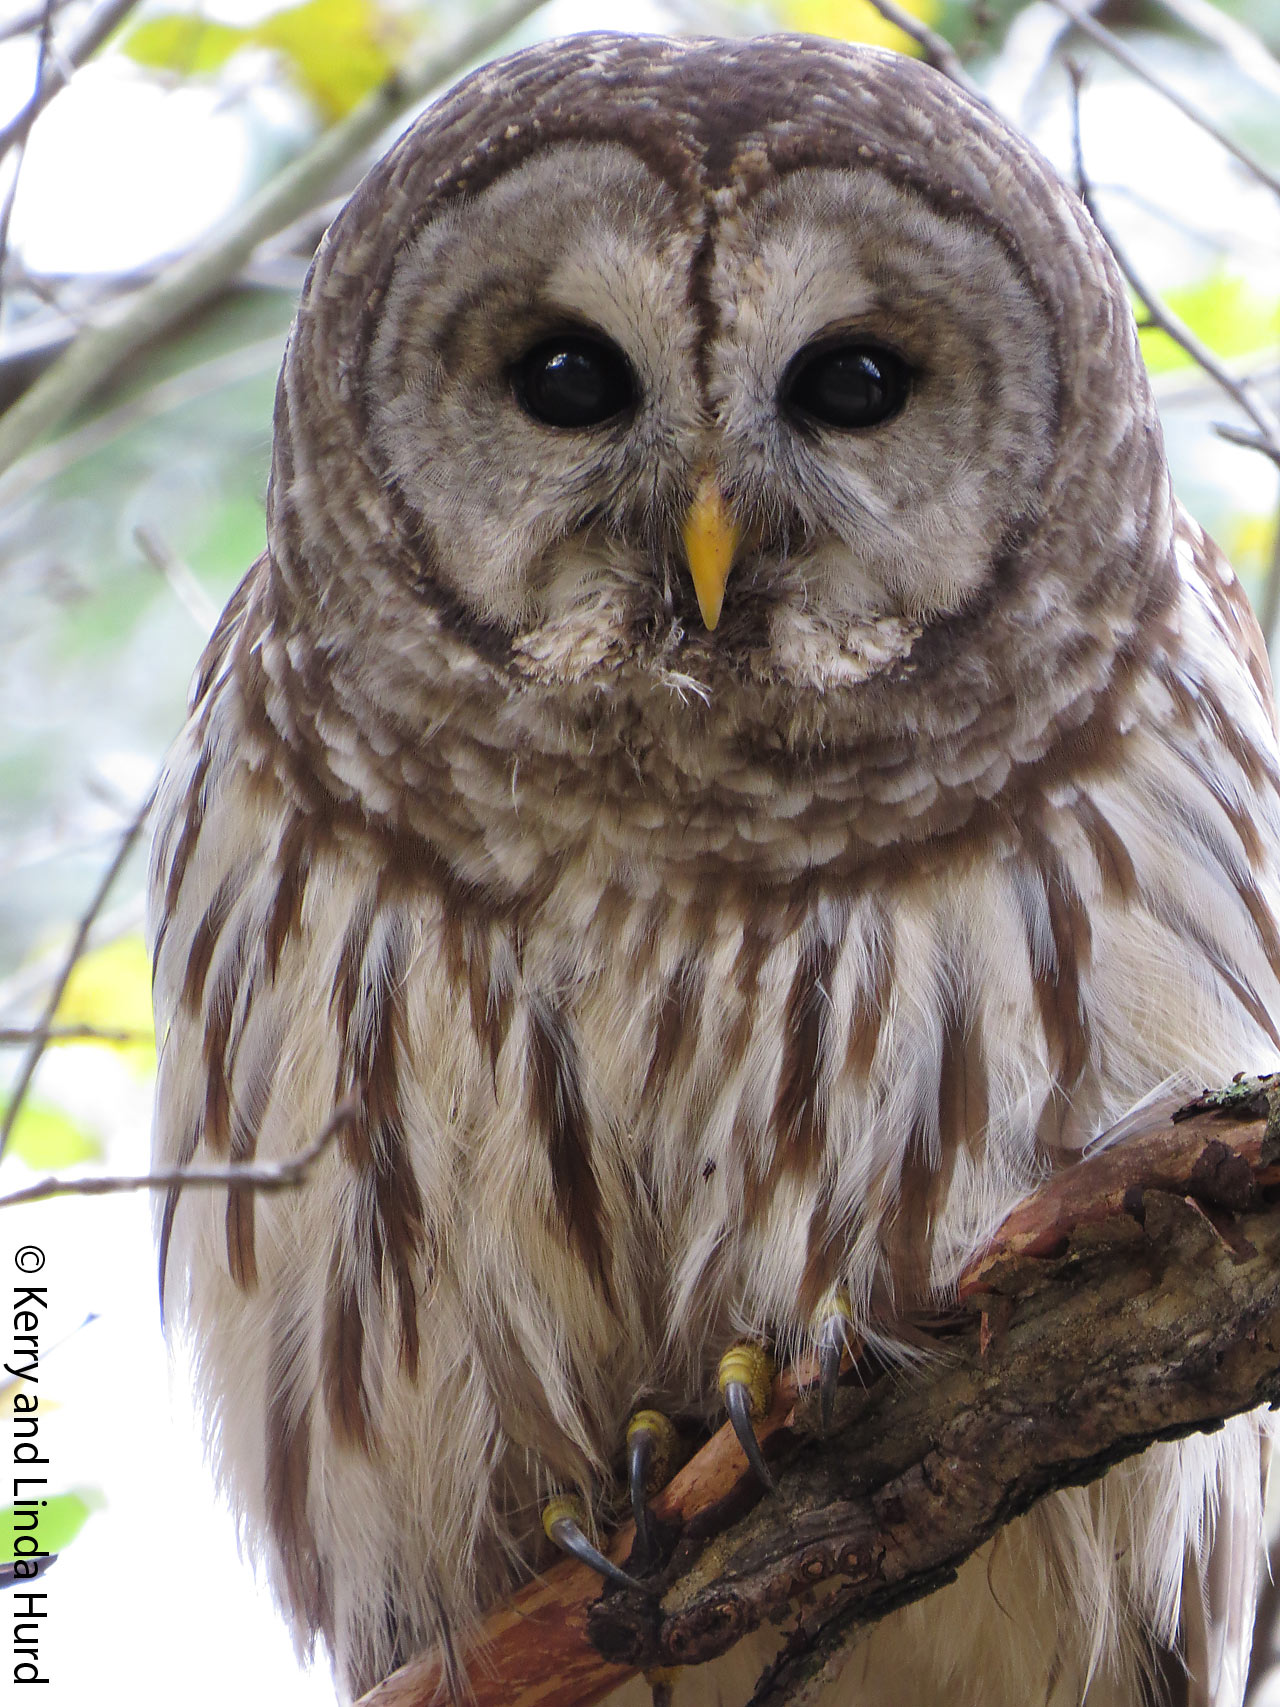 barred-owl-hurds-1